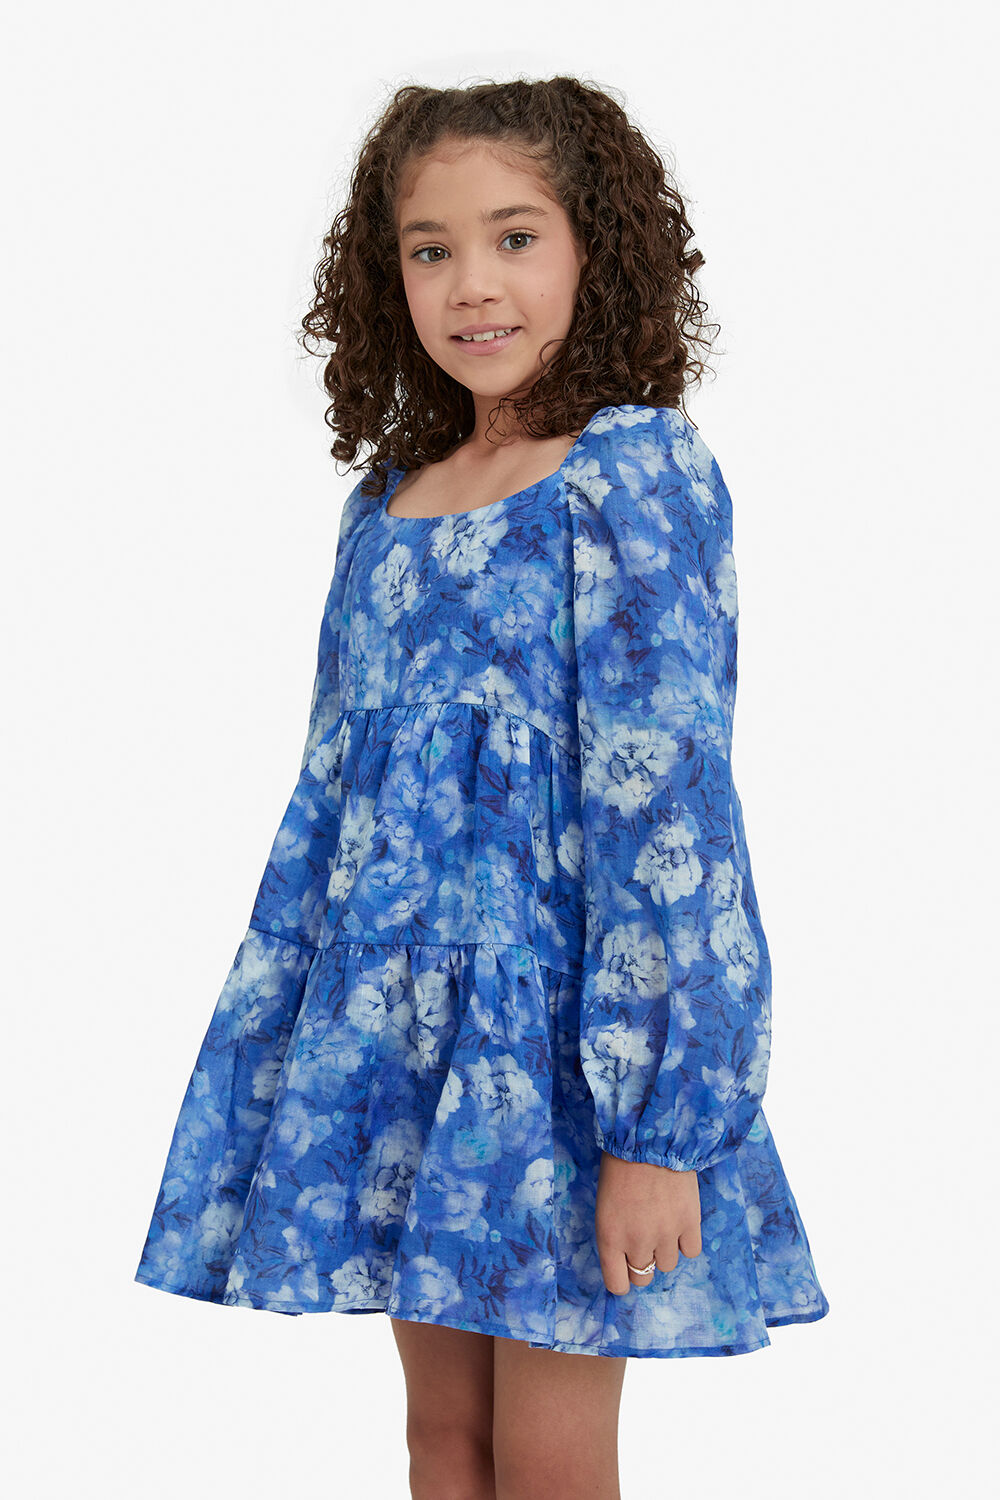  AIRLEA FLORAL  DRESS in colour ROYAL BLUE